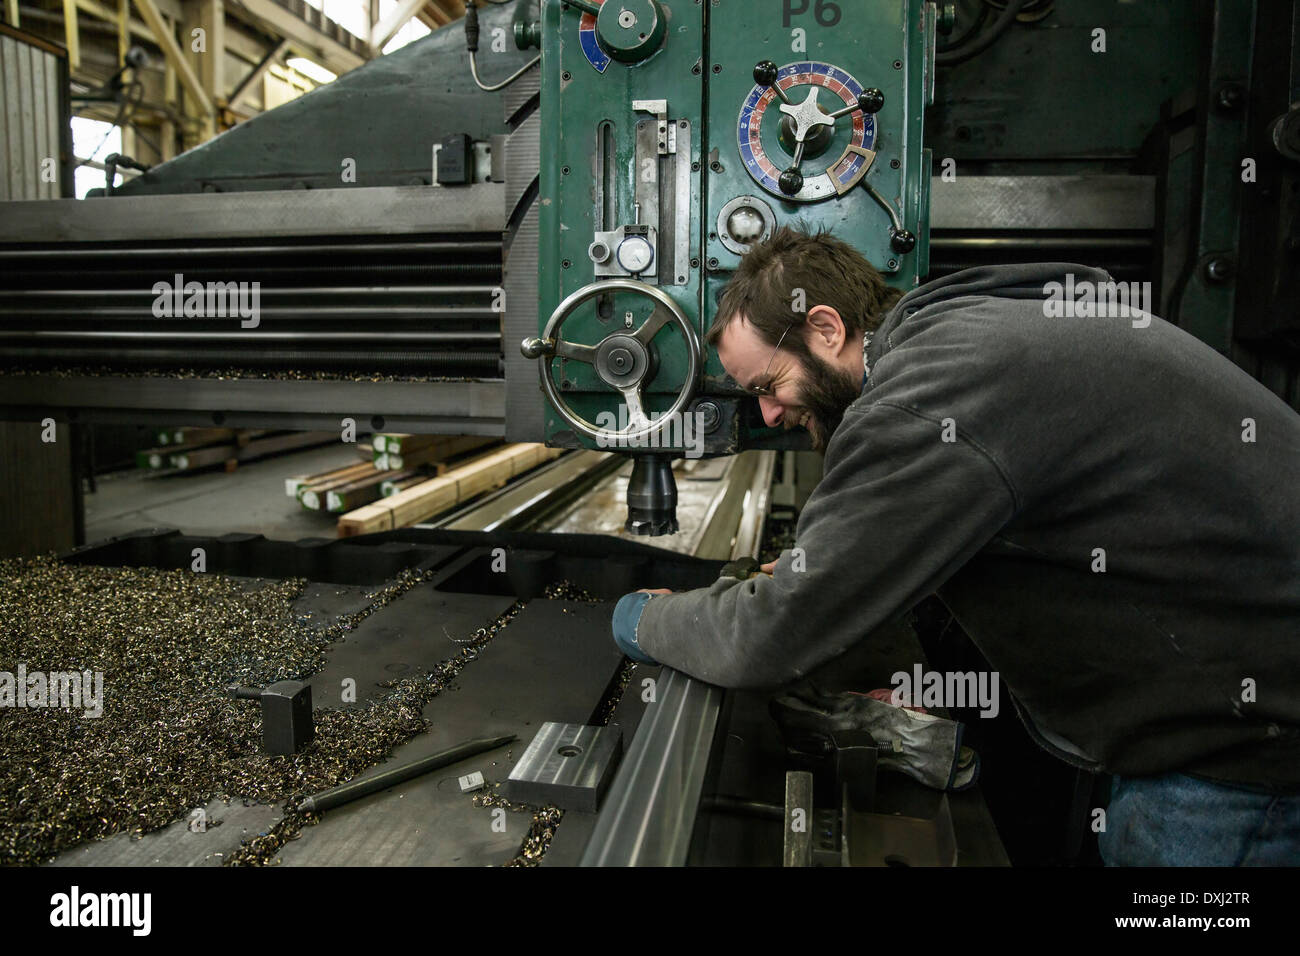 Caucasian man working at machinery in metal shop Stock Photo